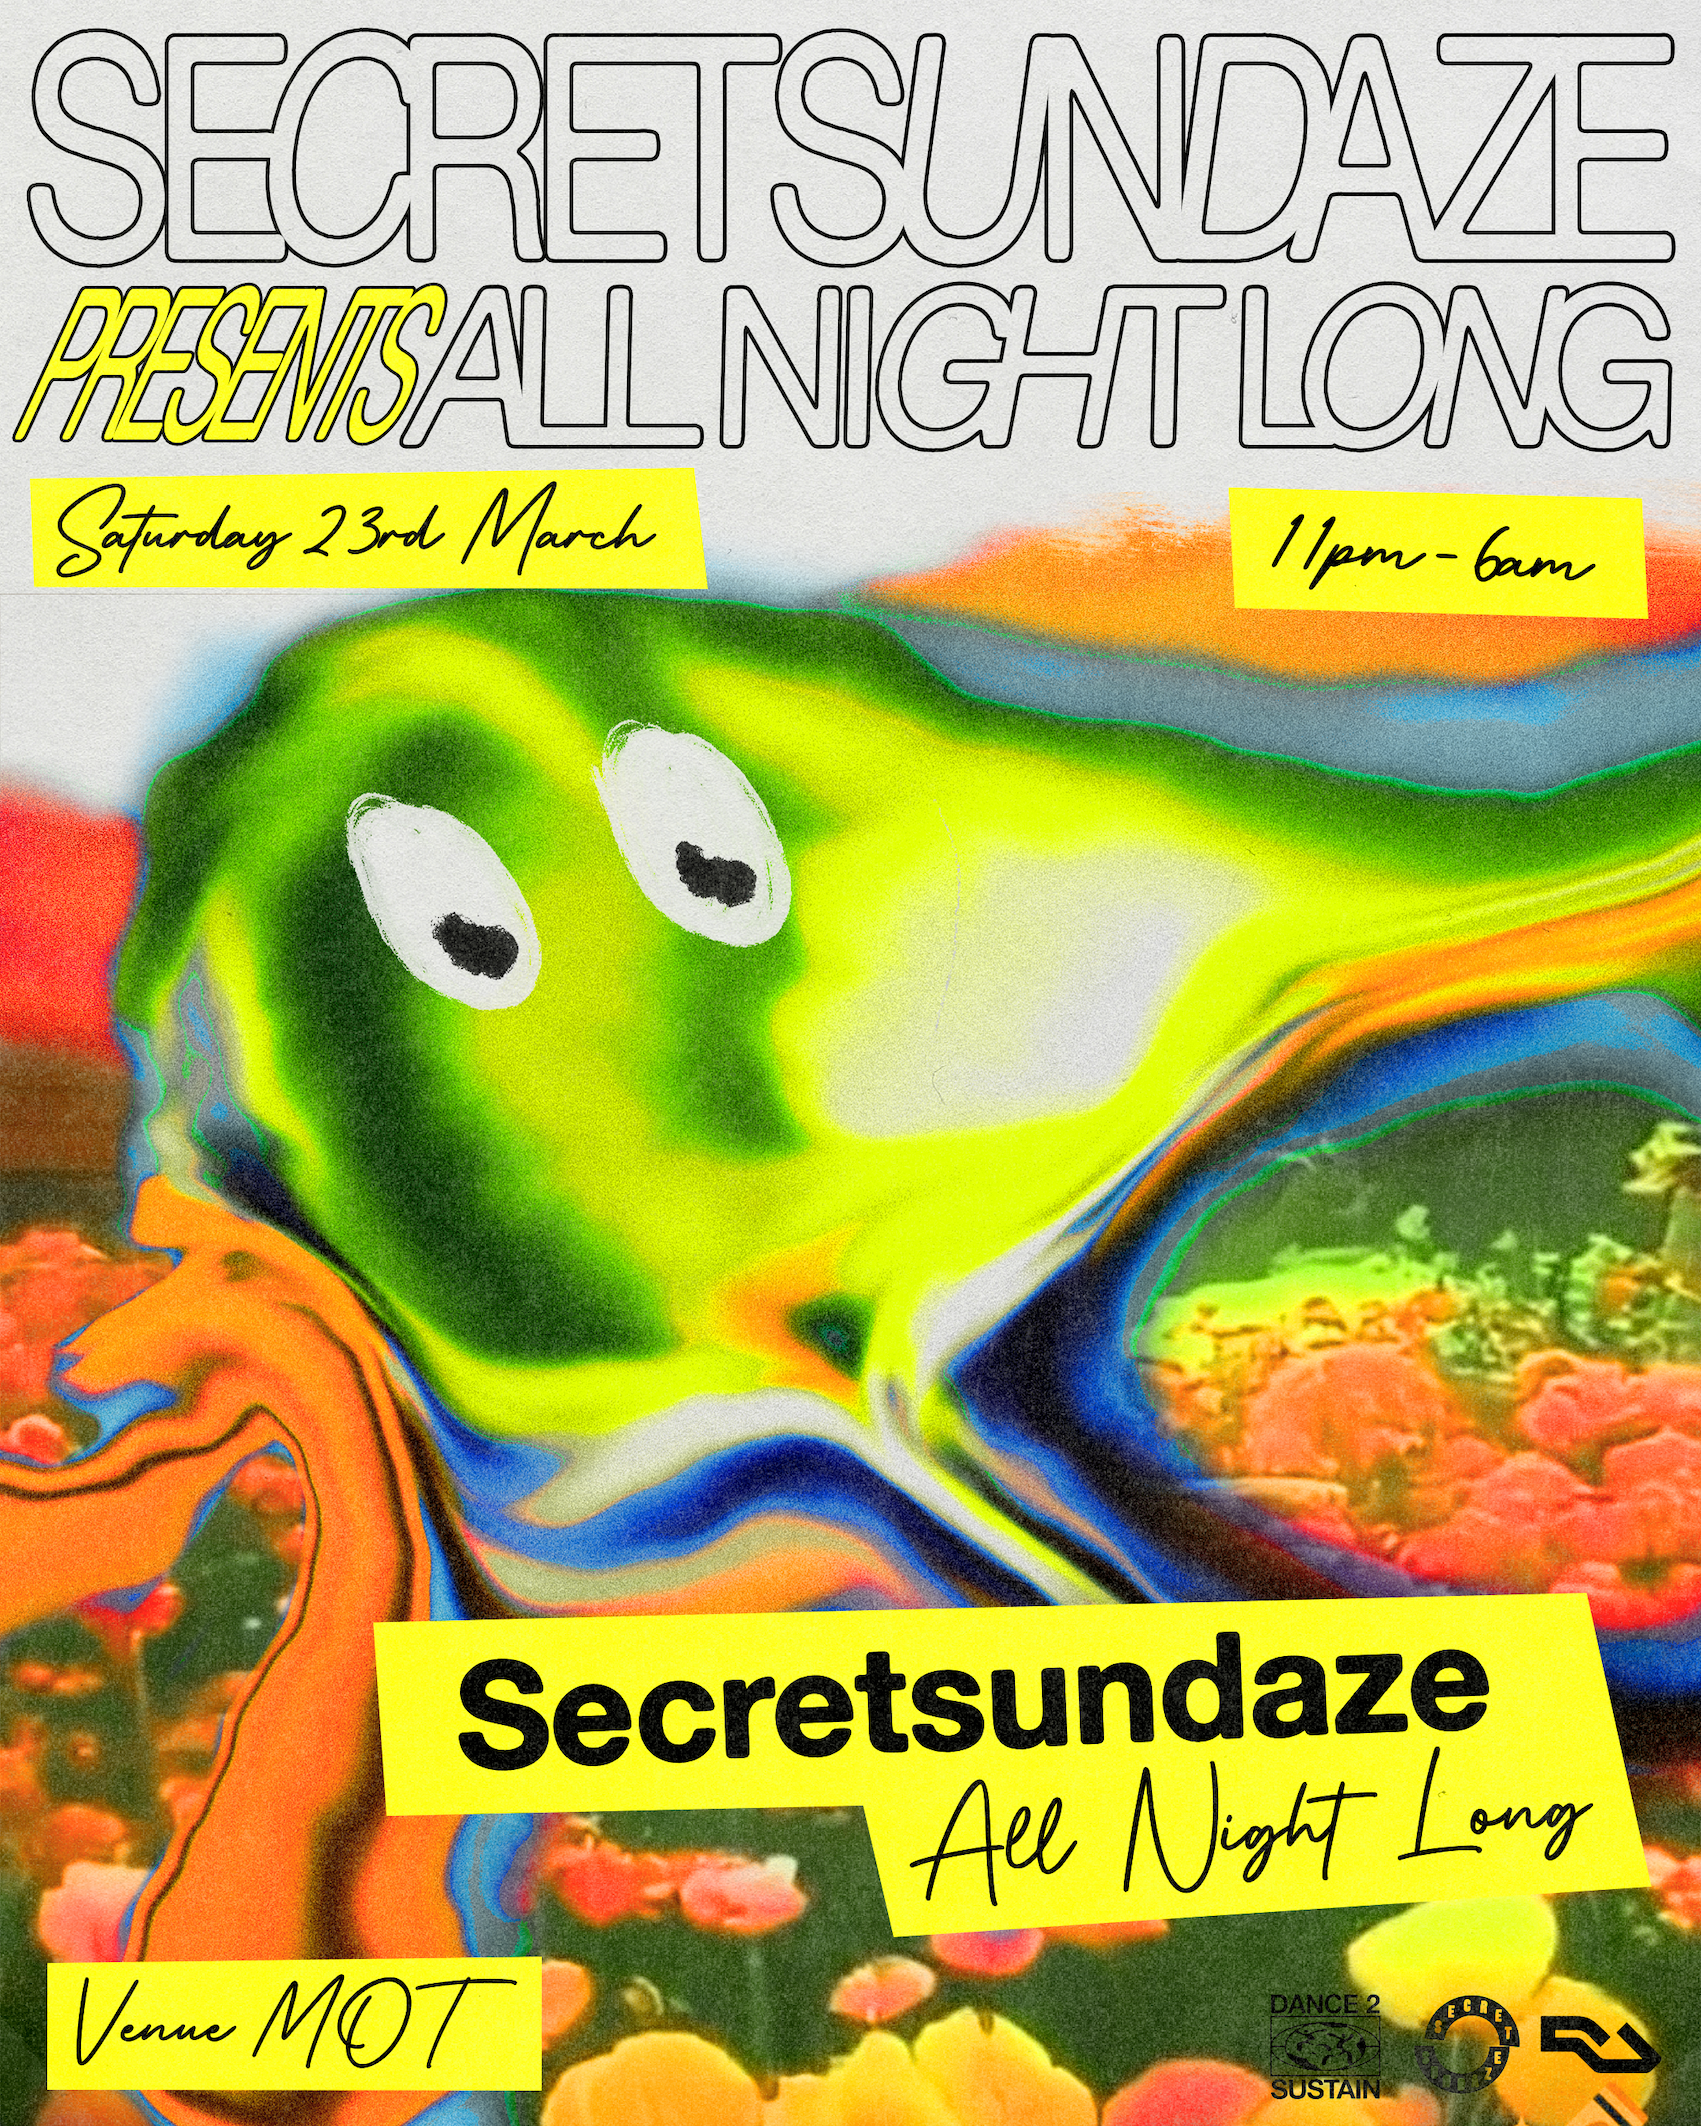 [CANCELLED] Secretsundaze presents: Secretsundaze All Night Long - フライヤー表